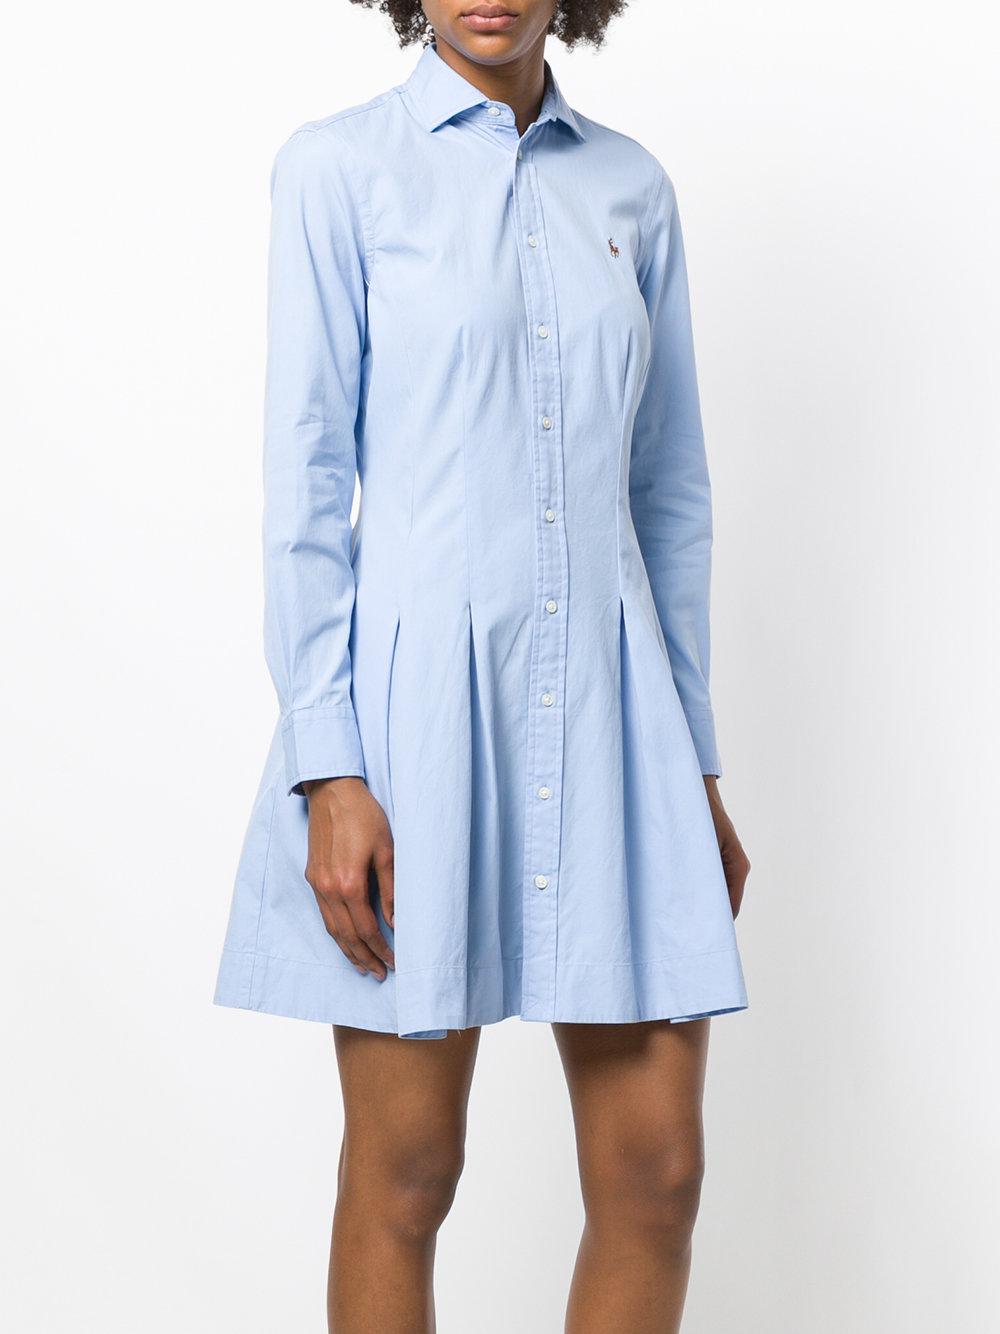 Polo Ralph Lauren Pleated Shirt Dress in Blue | Lyst